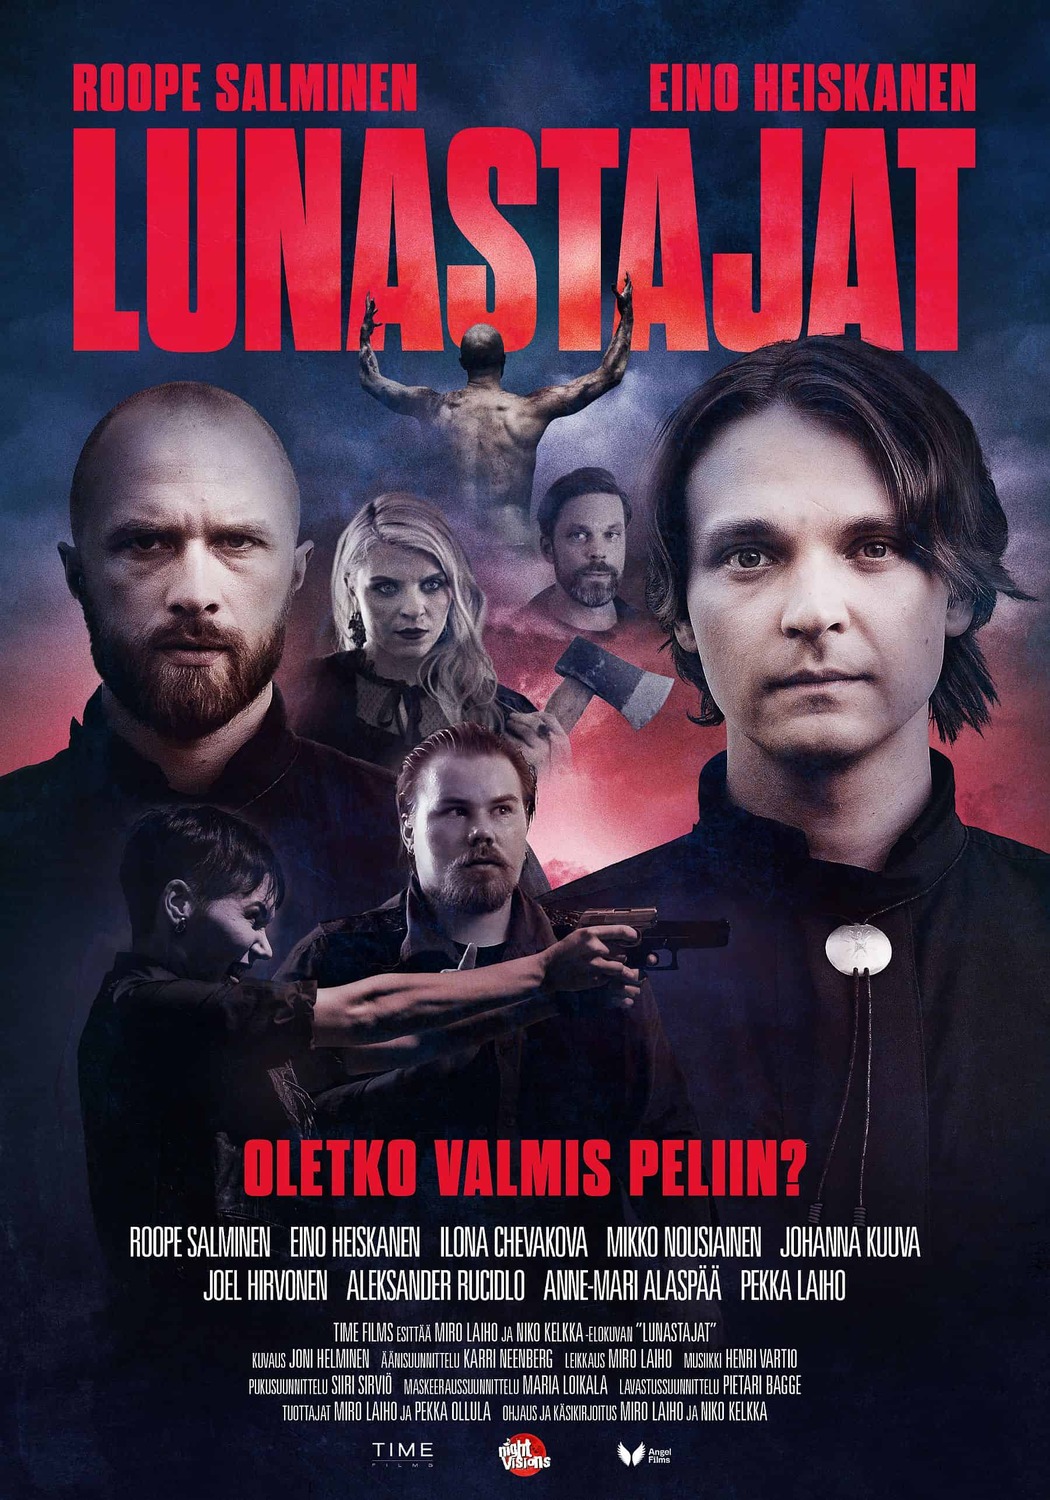 Extra Large Movie Poster Image for Lunastajat 